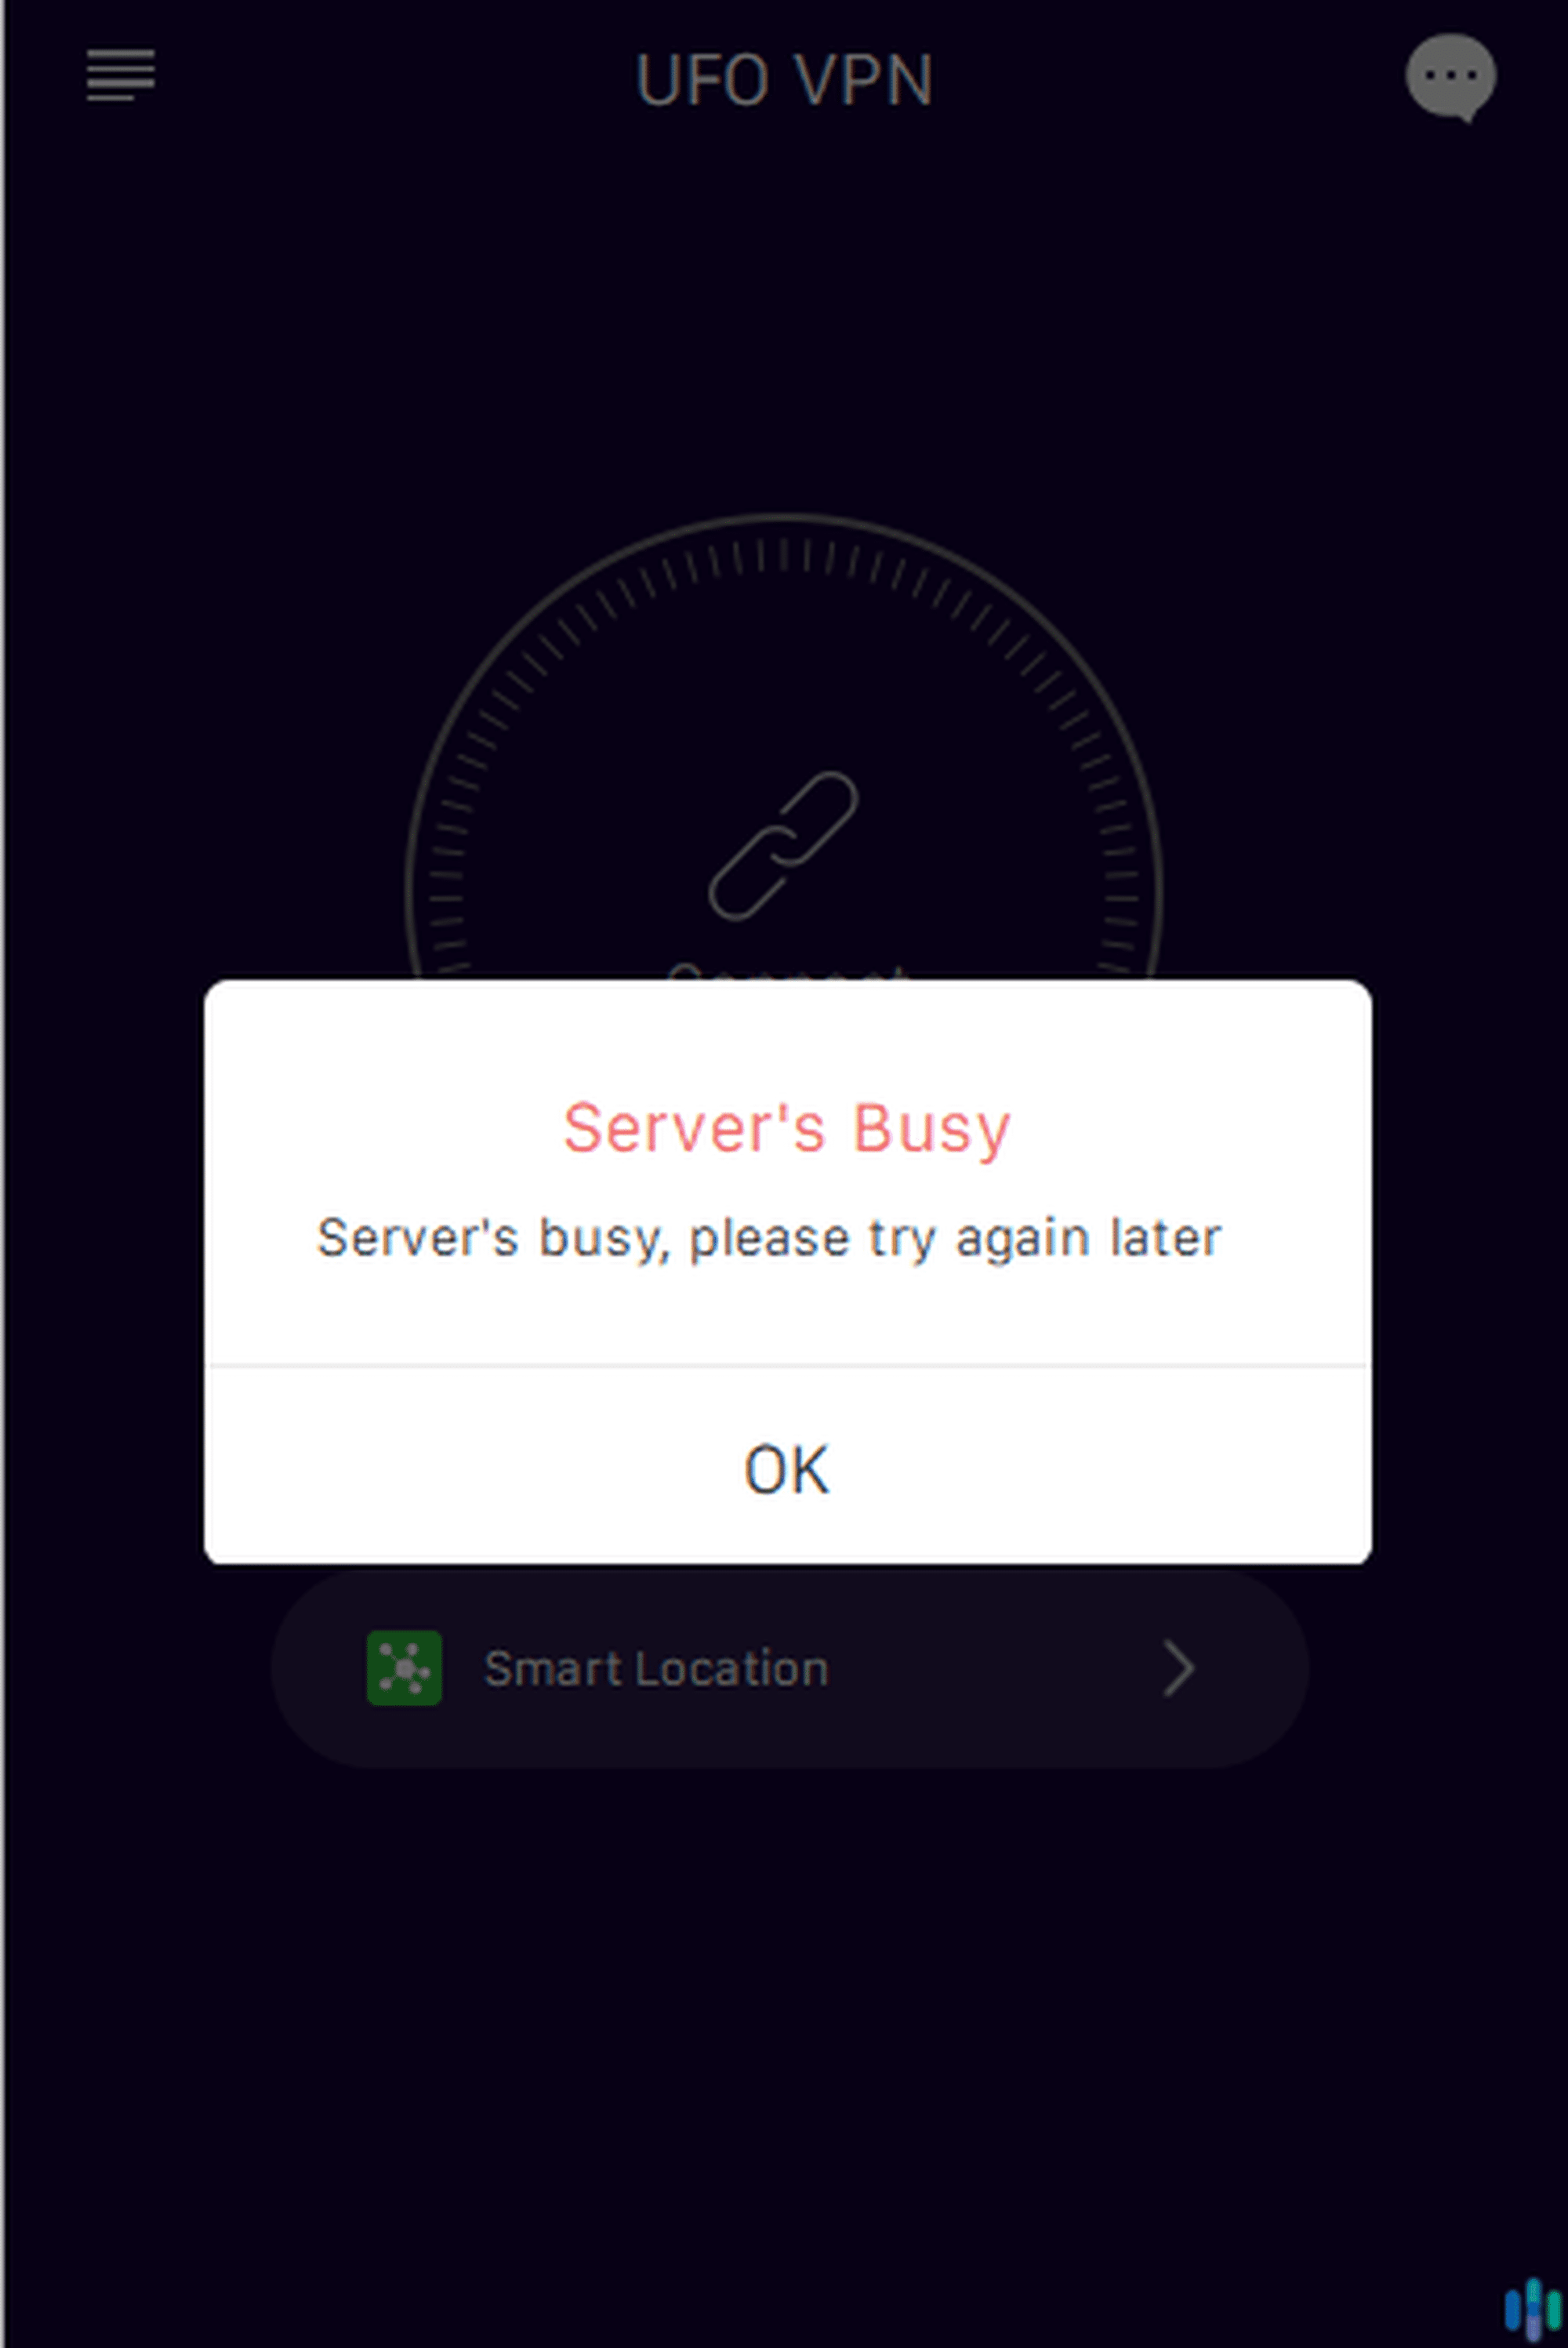 UFO VPN Server's busy